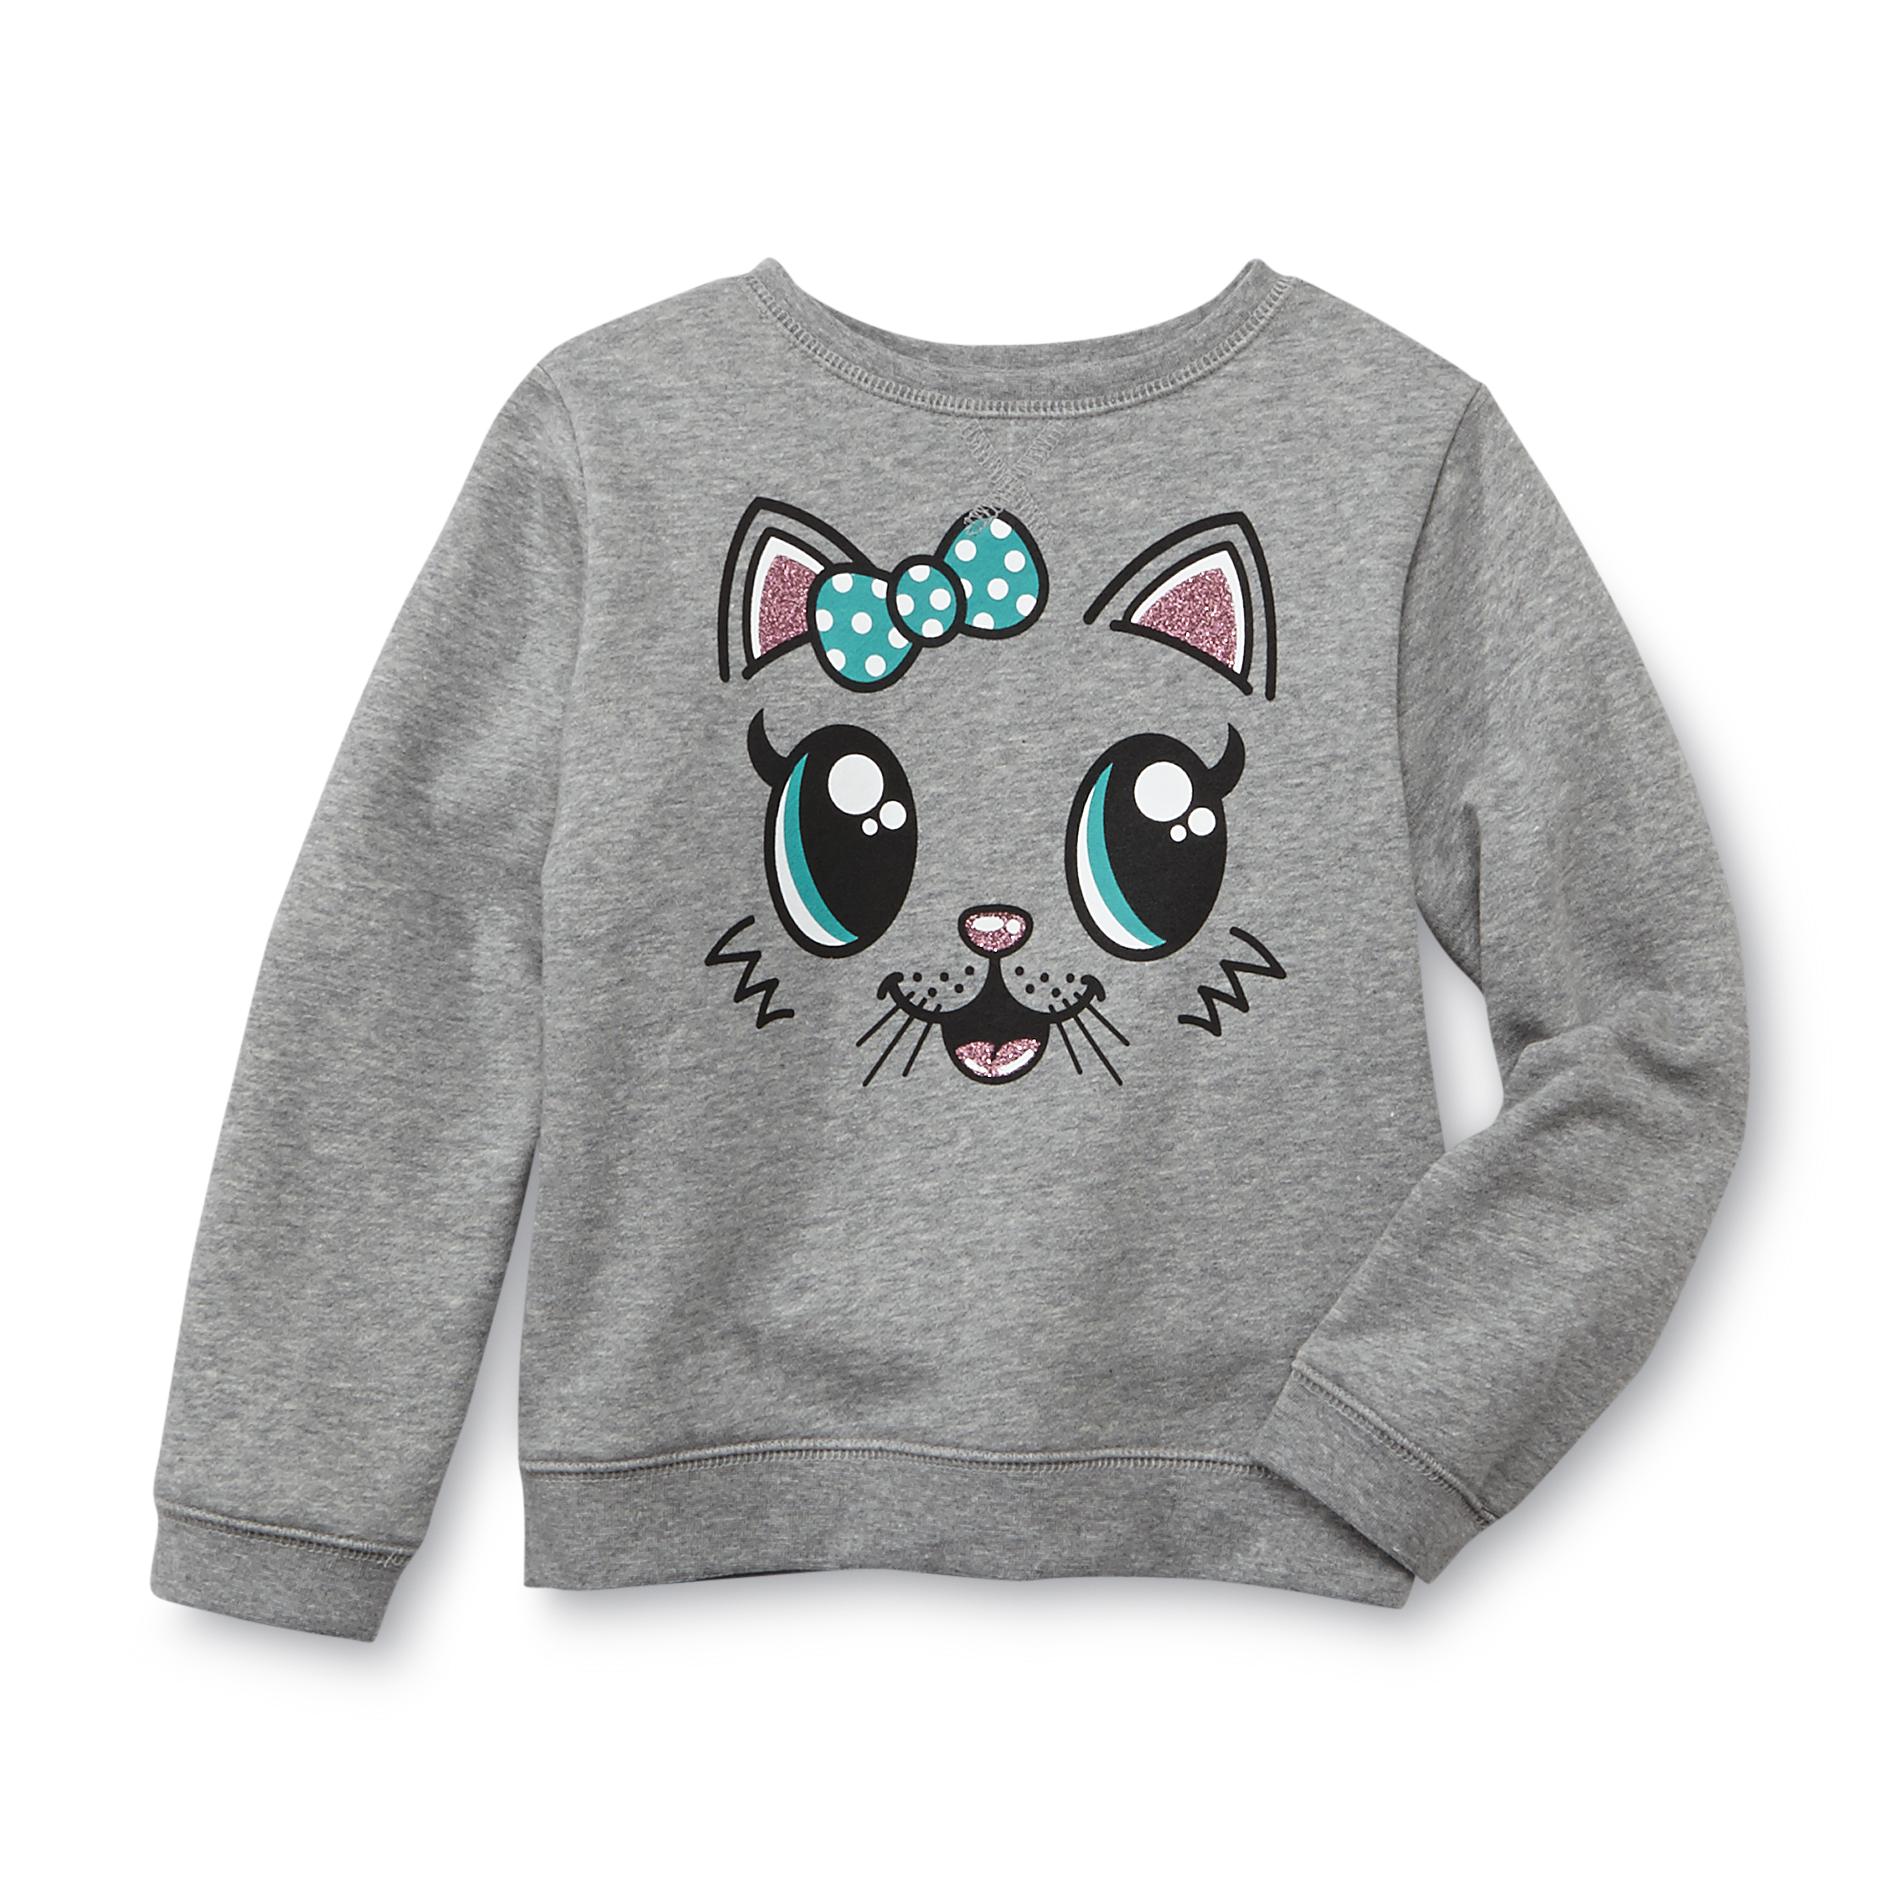 Joe Boxer Infant & Toddler Girl's Graphic Sweatshirt - Kitten